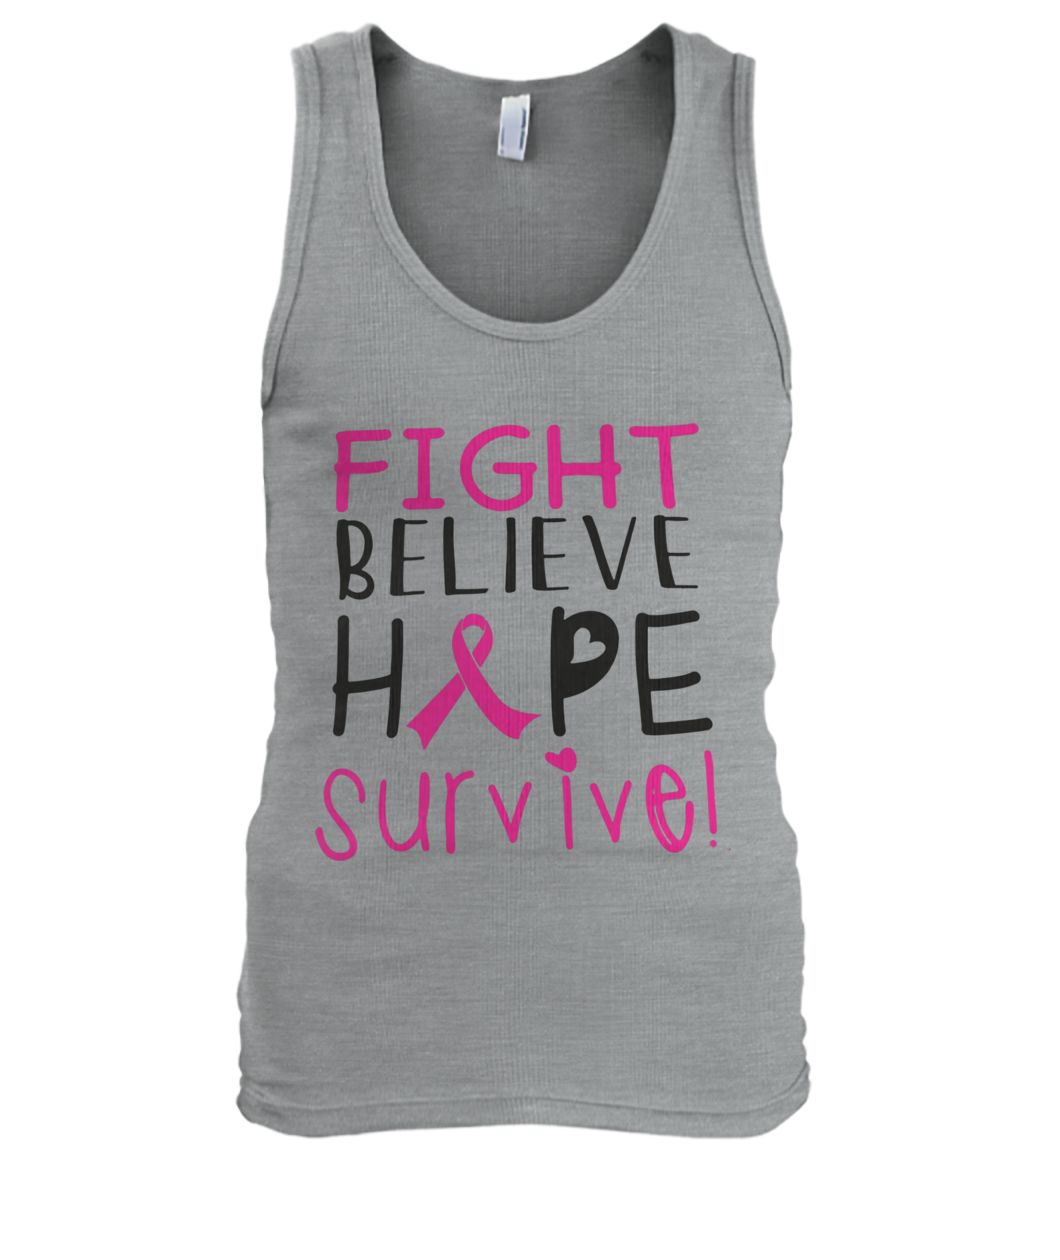 Fight believe hope survive breast cancer awareness men's tank top